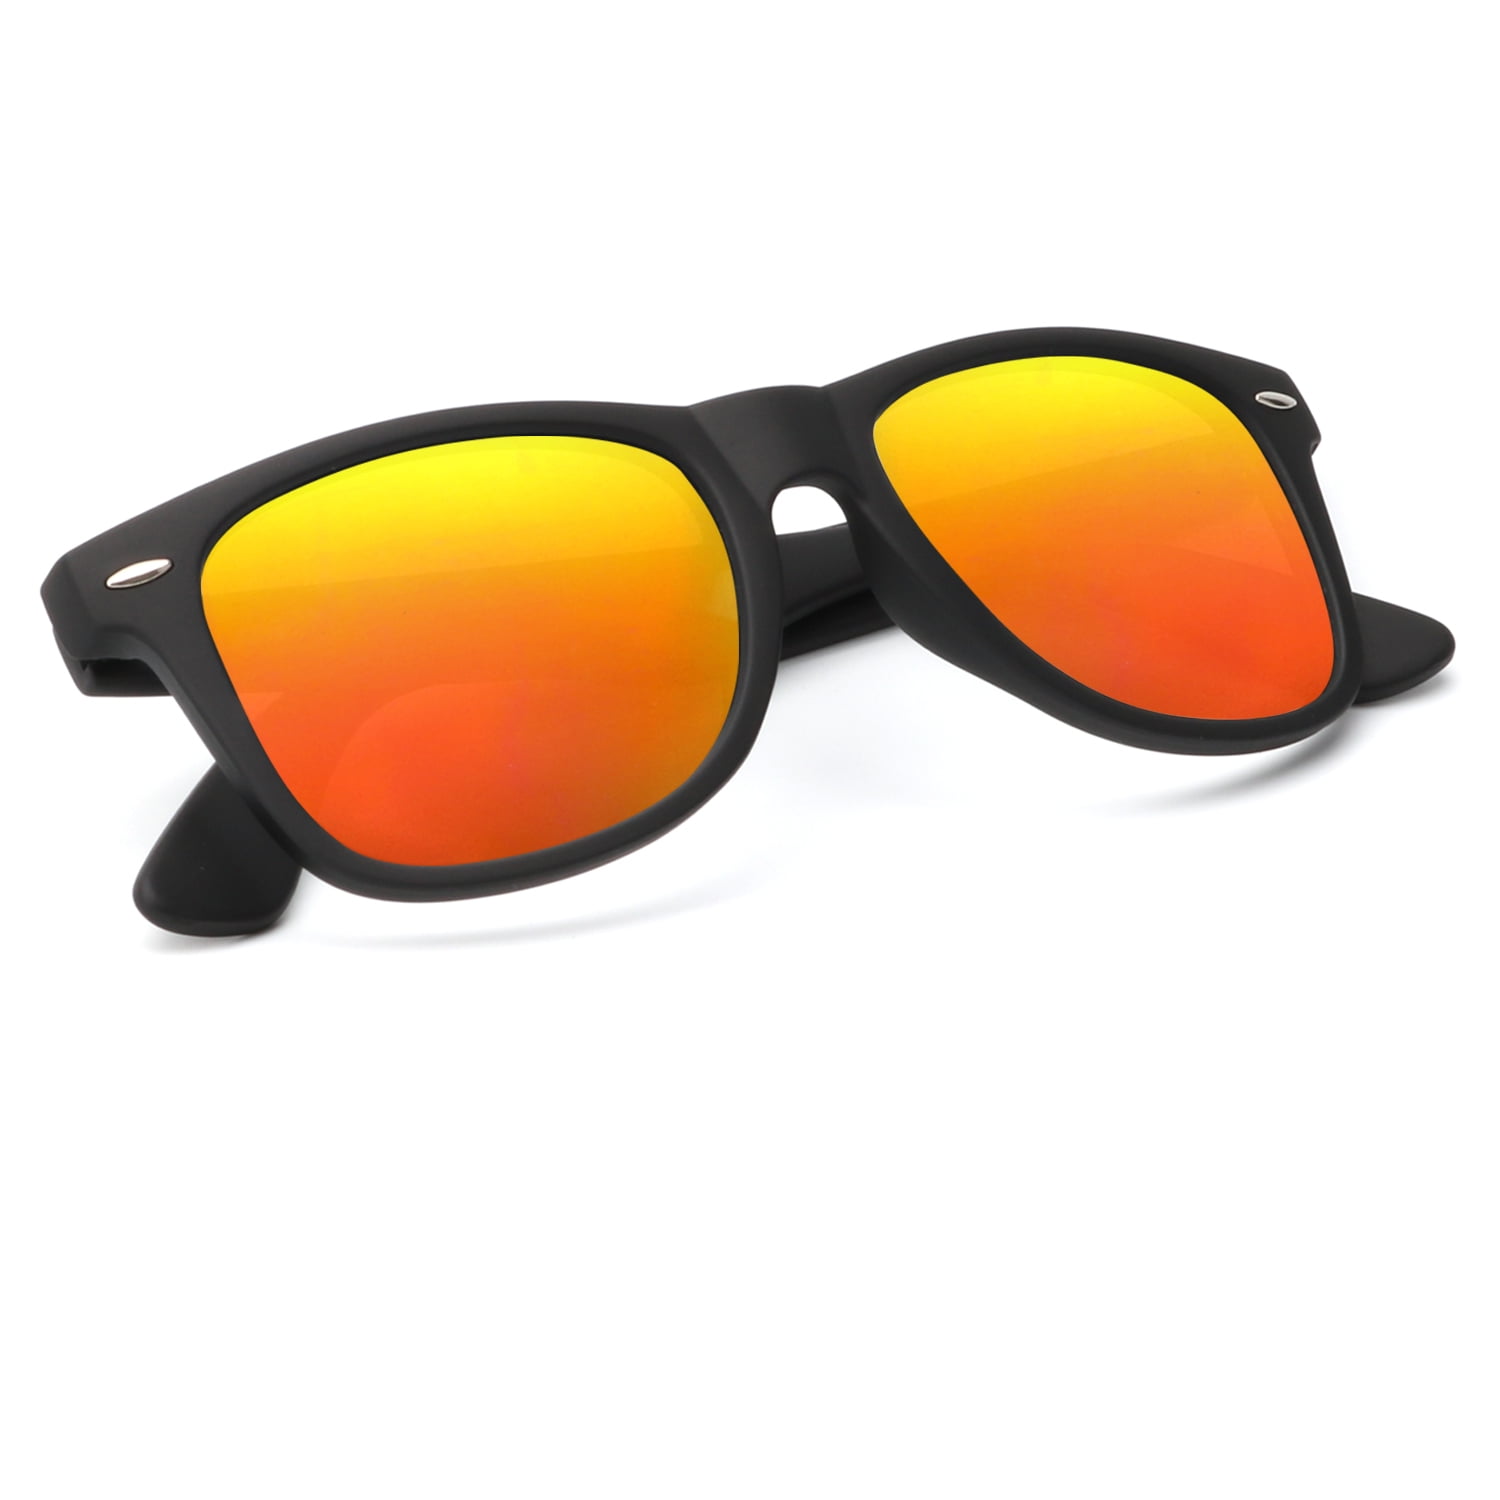 100 Classic Sports Sunglasses Polarized Colorful Lenses Vintage Square UV Protection Glasses Women